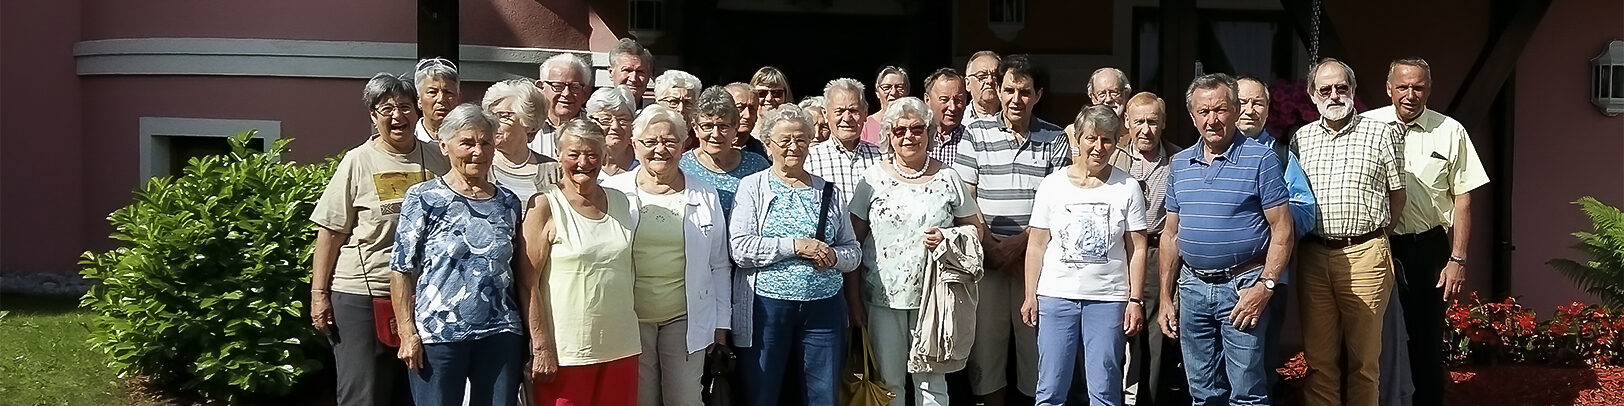 Bildausschnitt Gruppenfoto Seniorenferien 2019 in Reutte